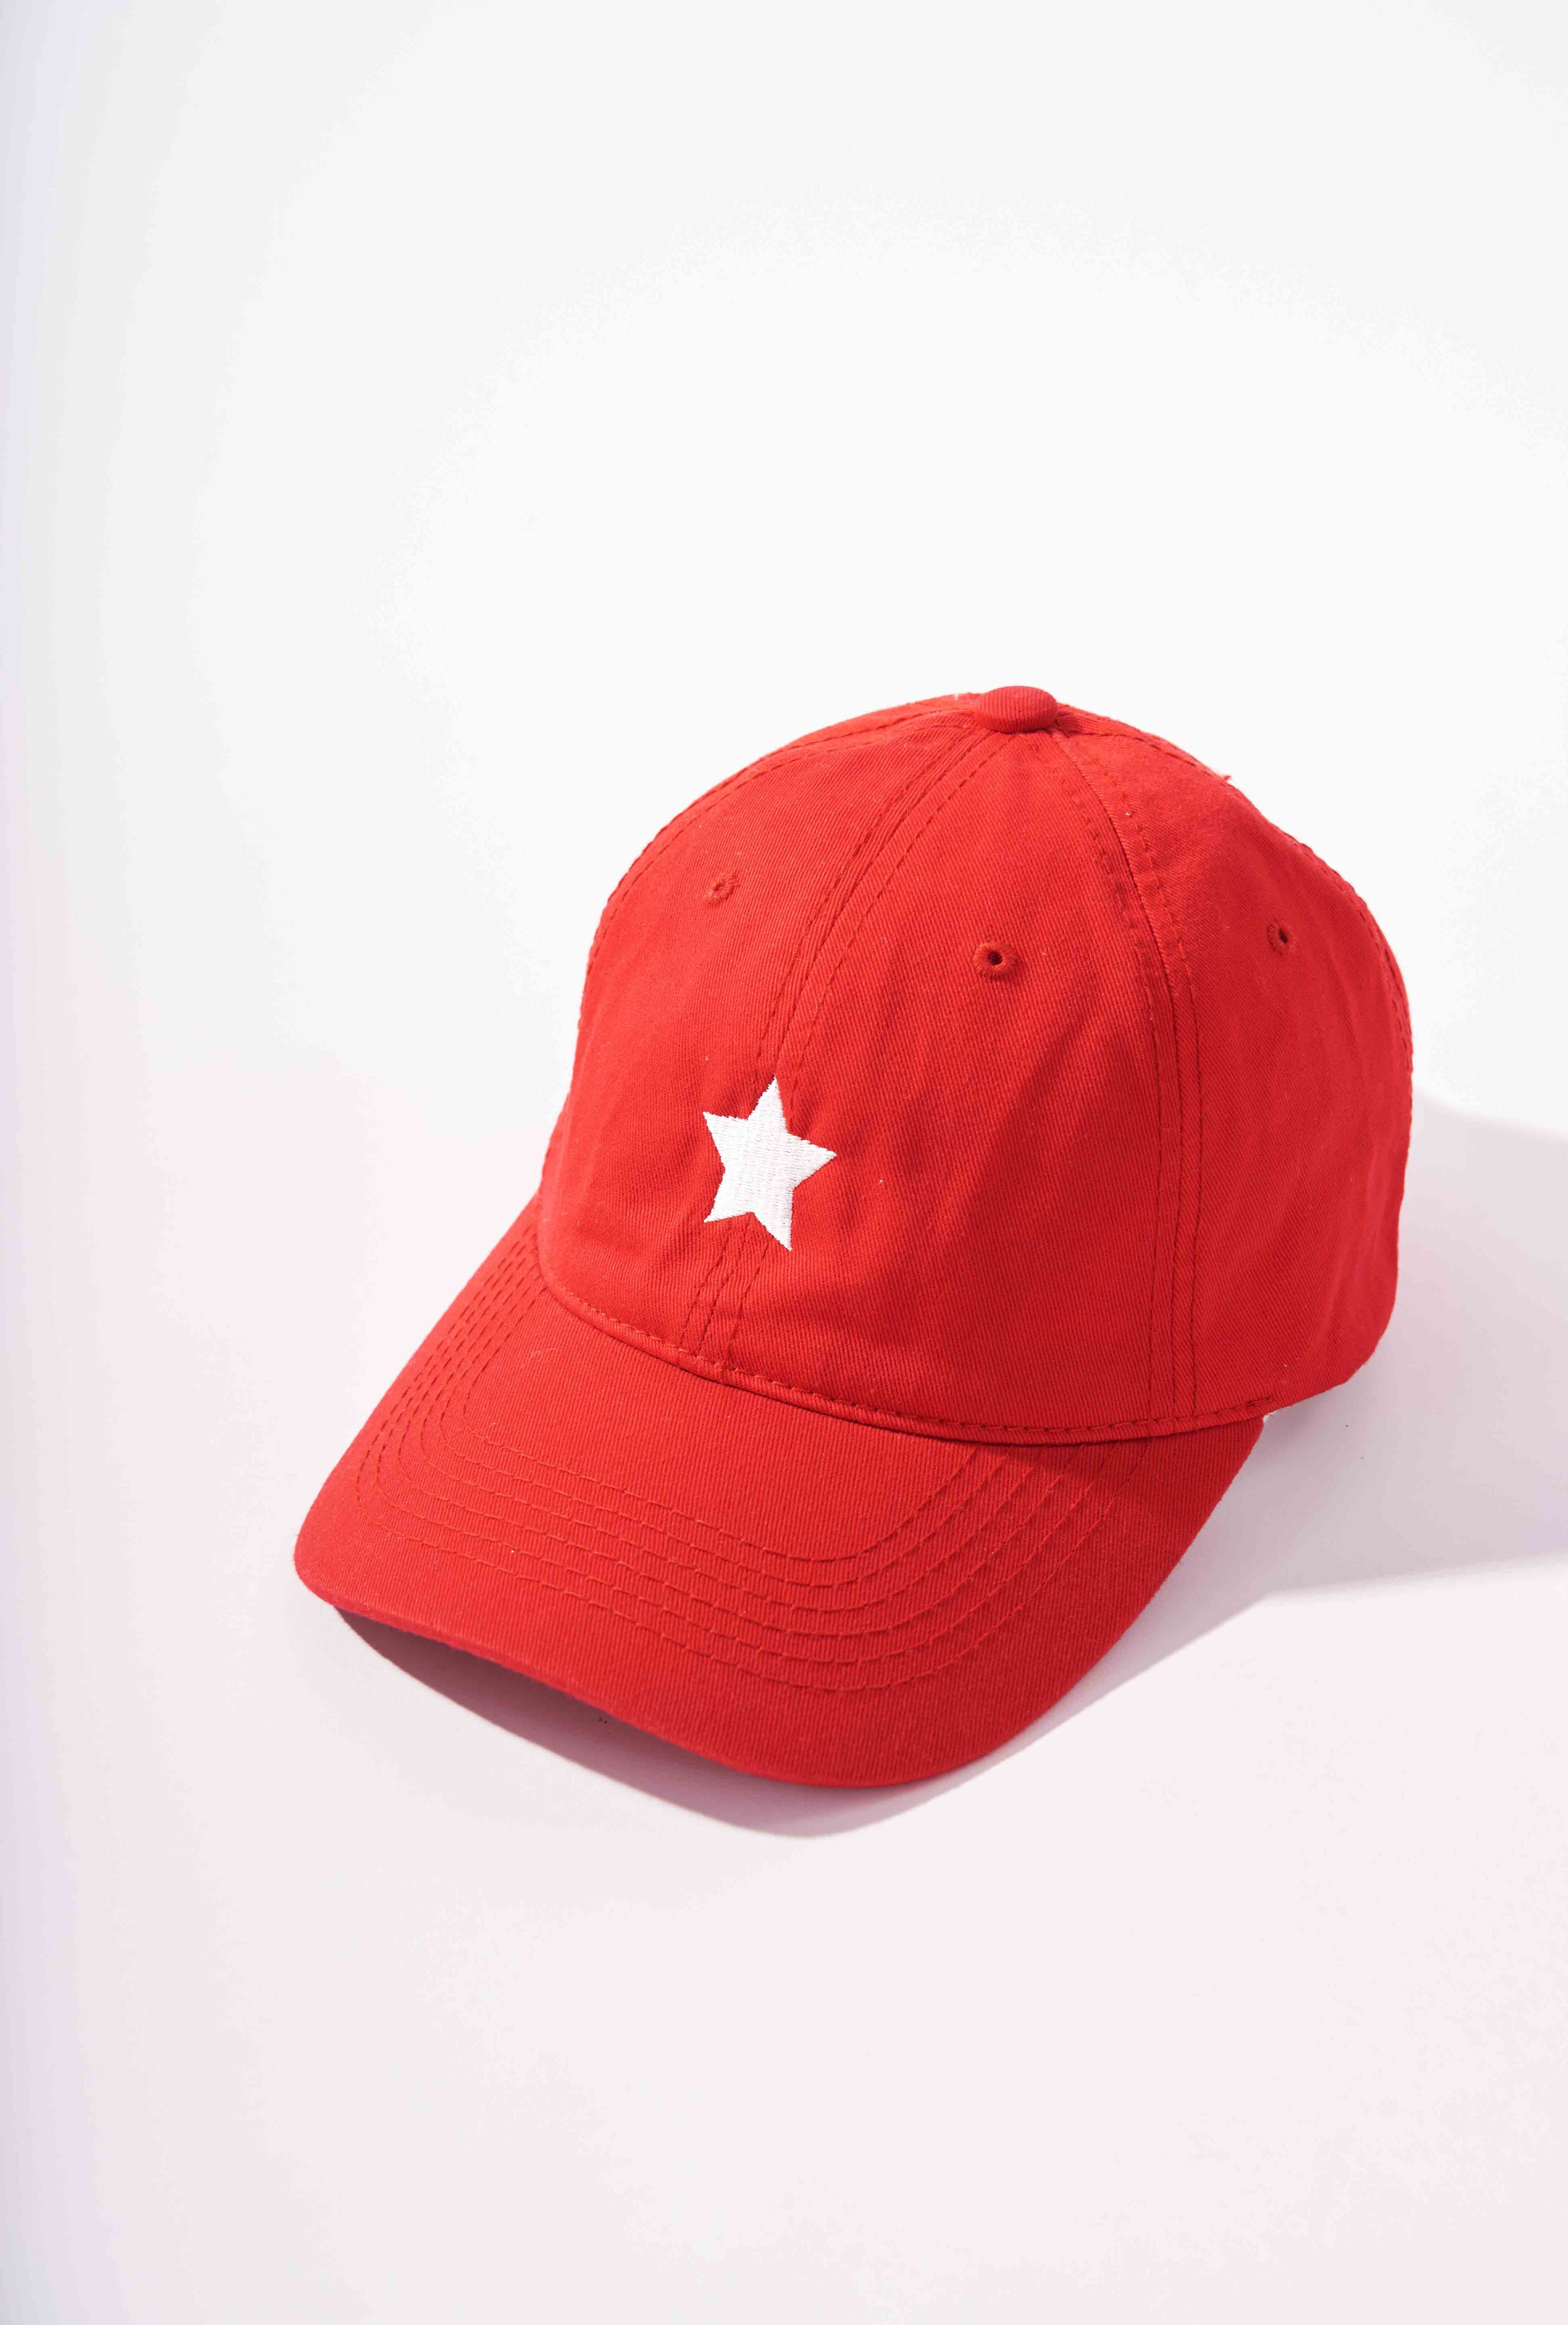 BAY CAP RED